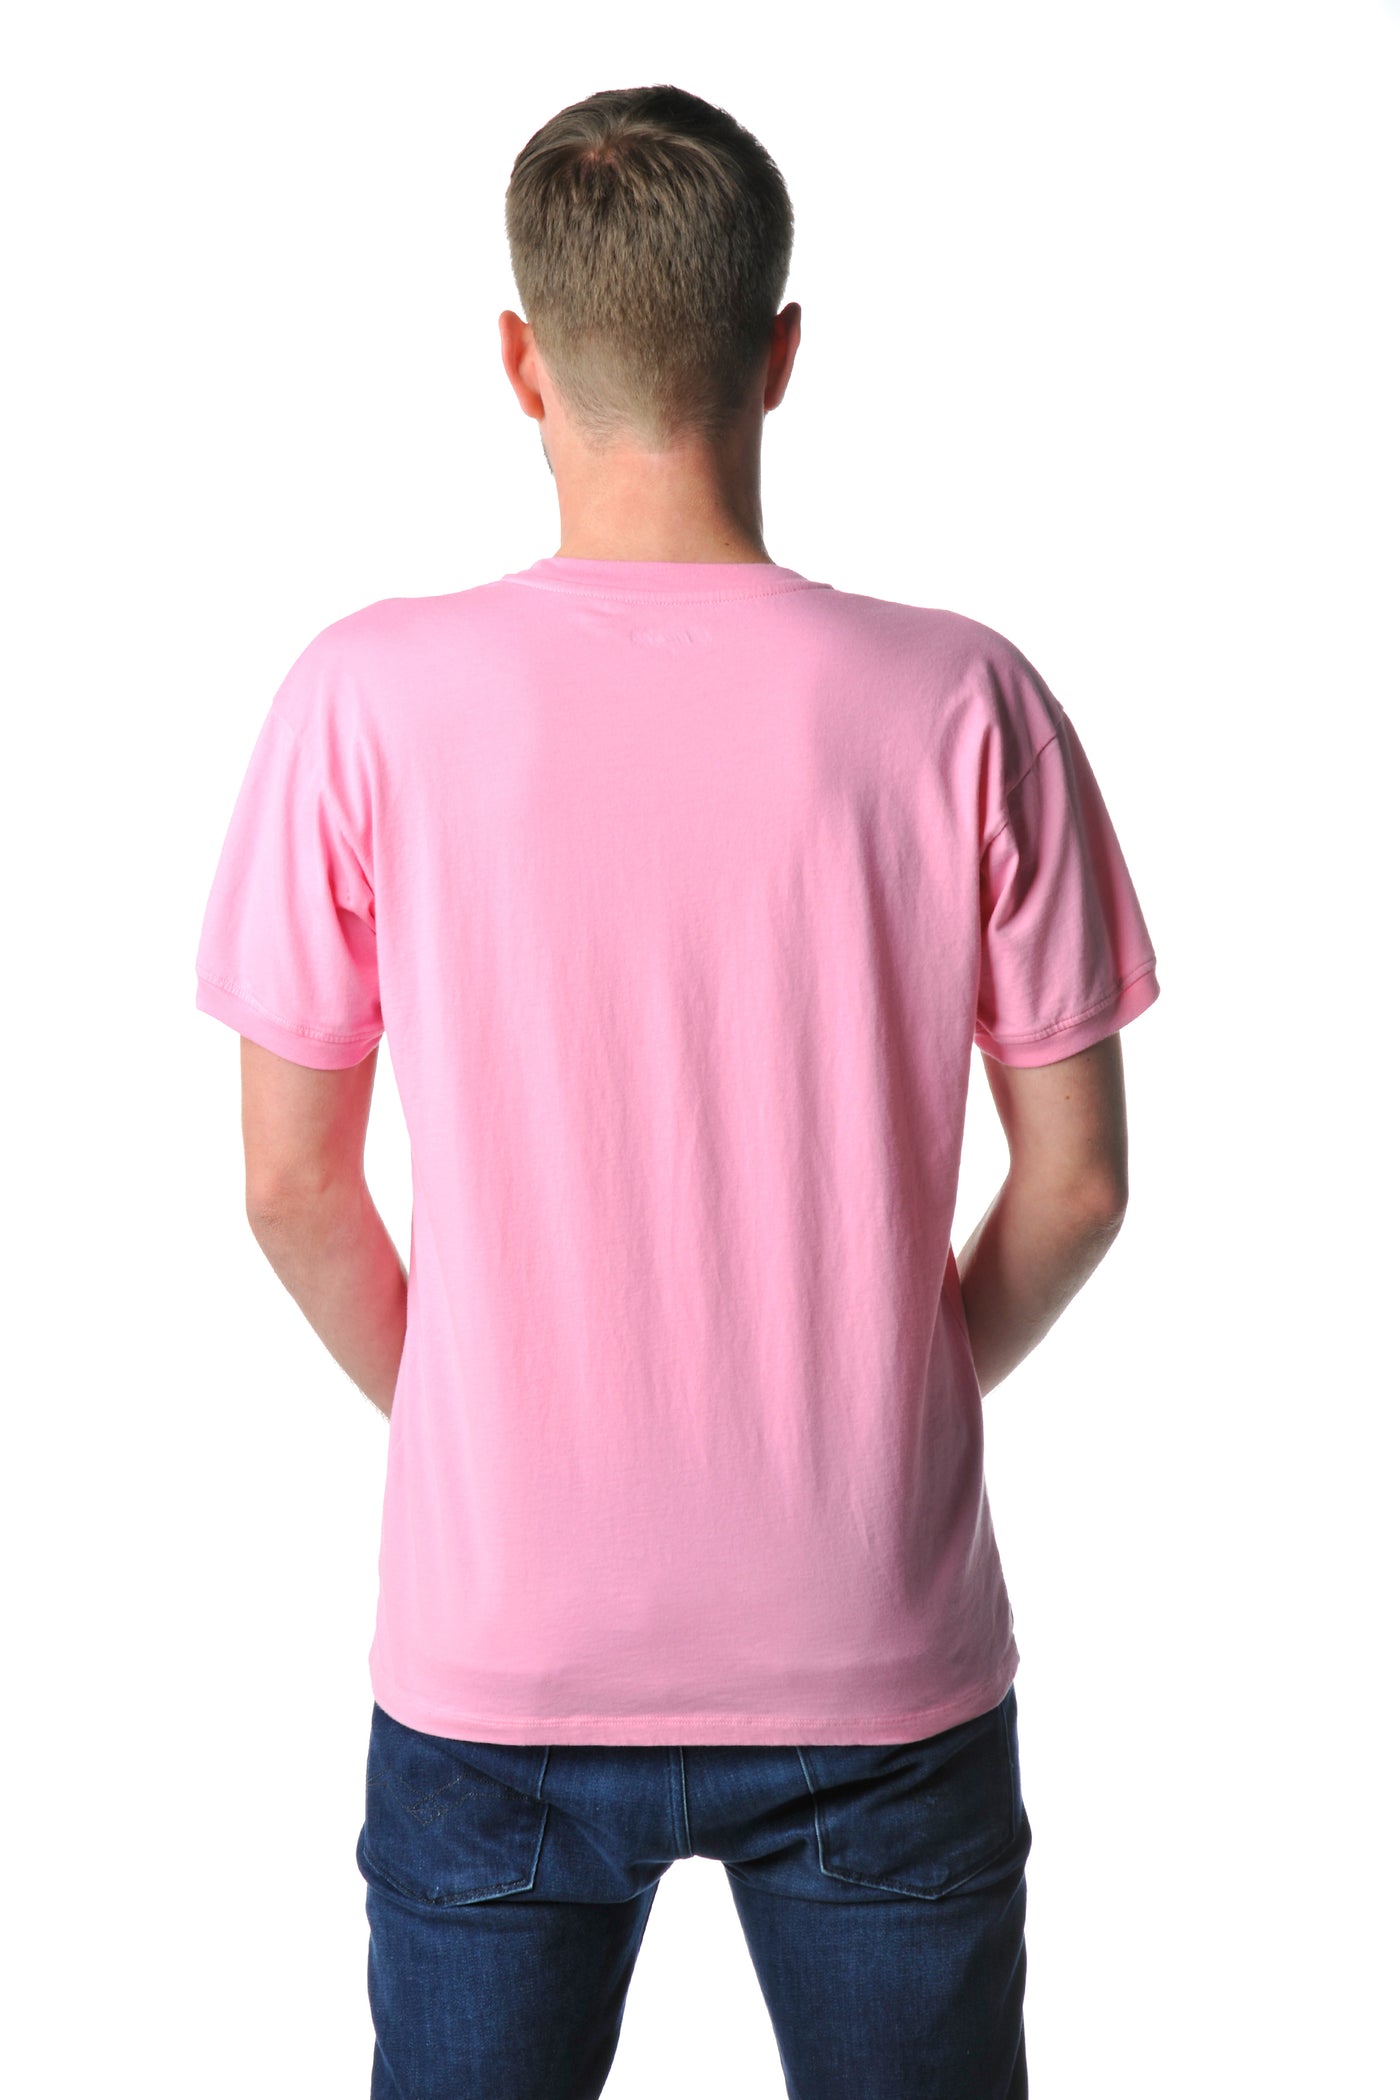 Taschen Beerpong Grantler Shirt pink